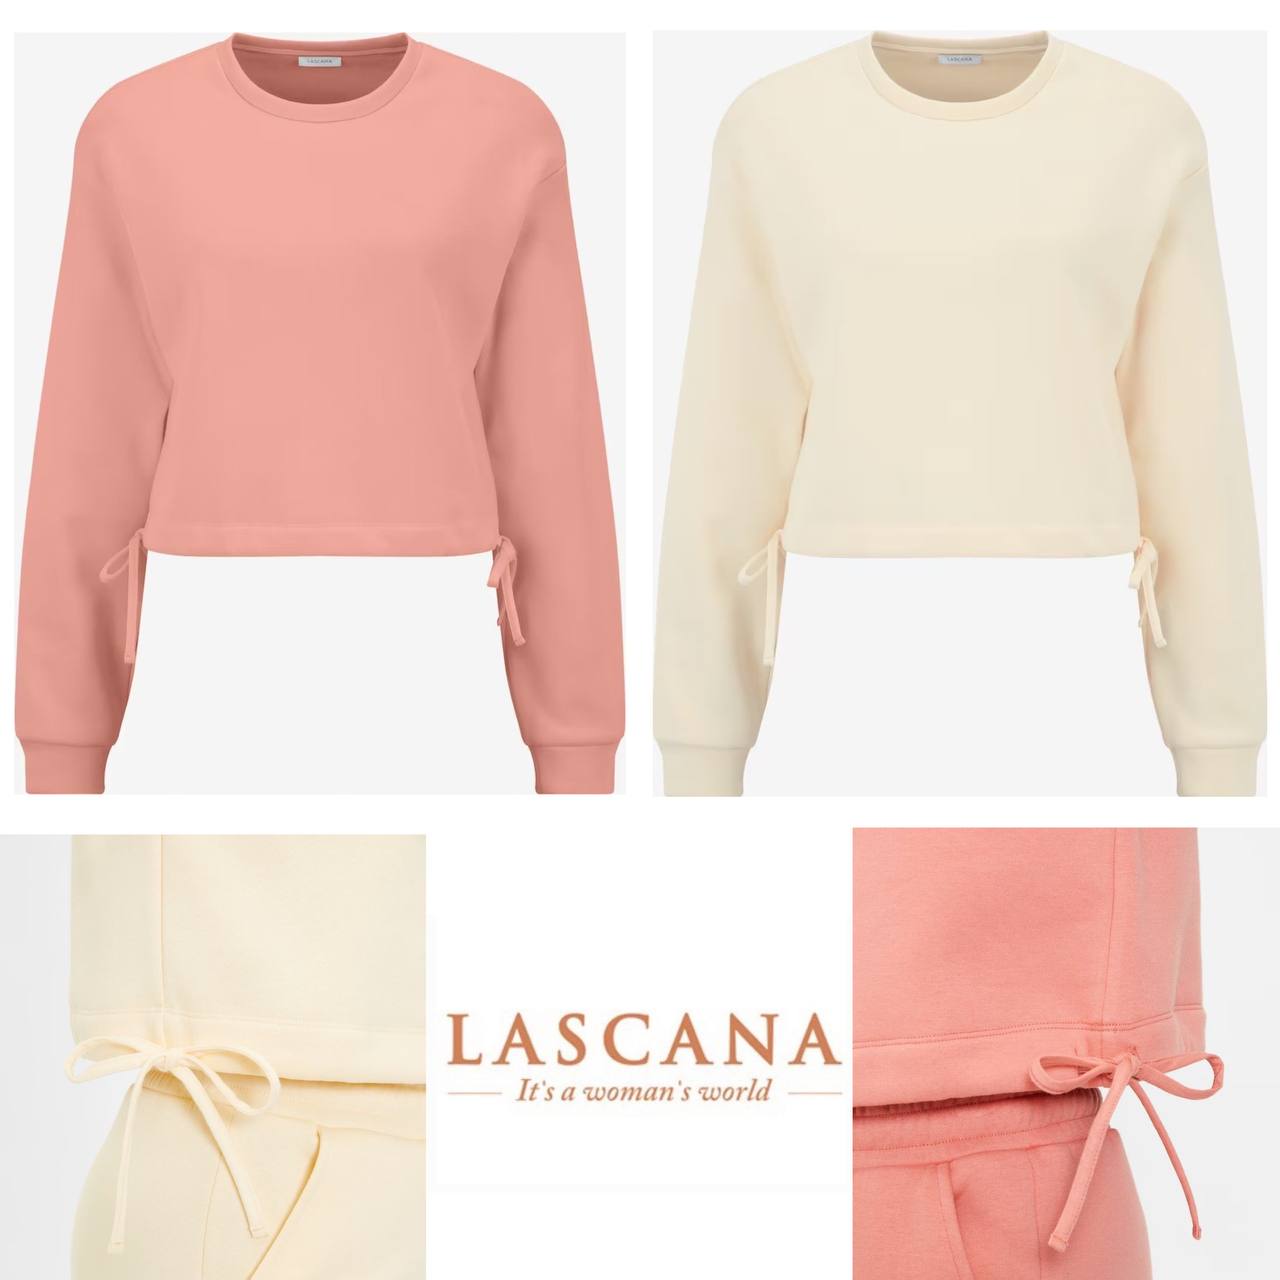 Women's sweatshirts from Lascana